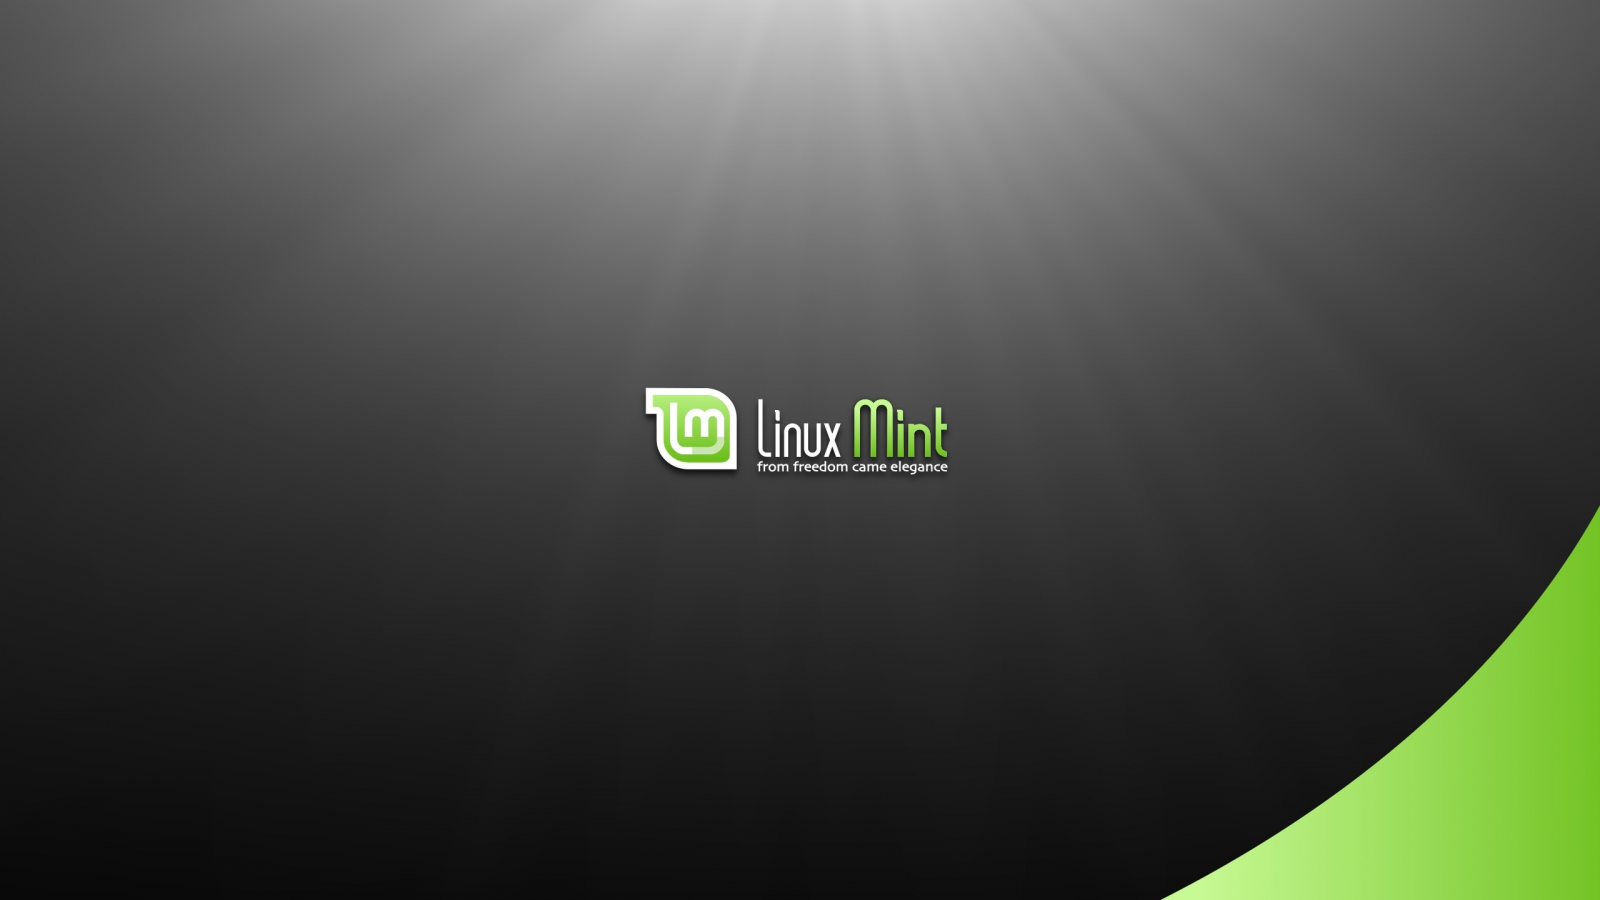 from freedom came elegance, linux, linux mint, операционная система